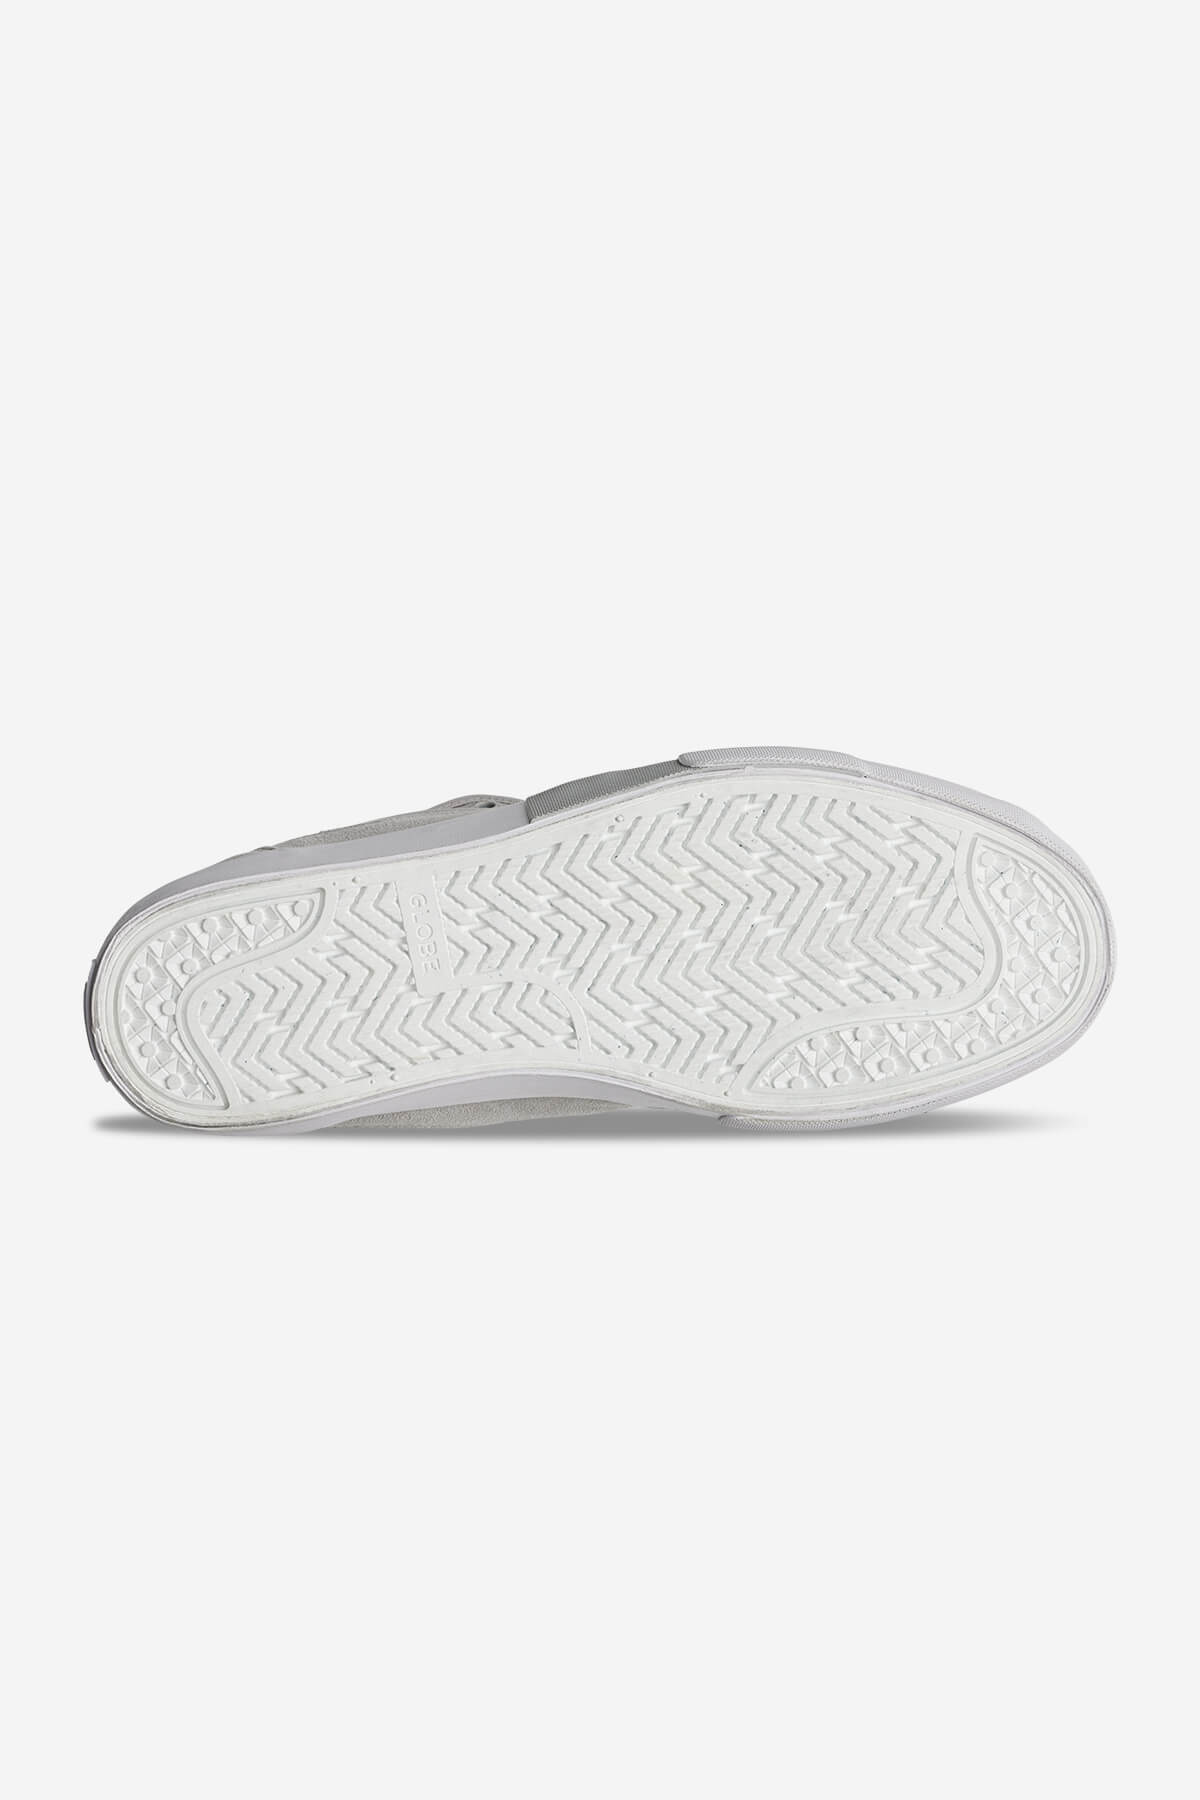 Globe - Mahalo Plus - Grey/White - Skate Shoes